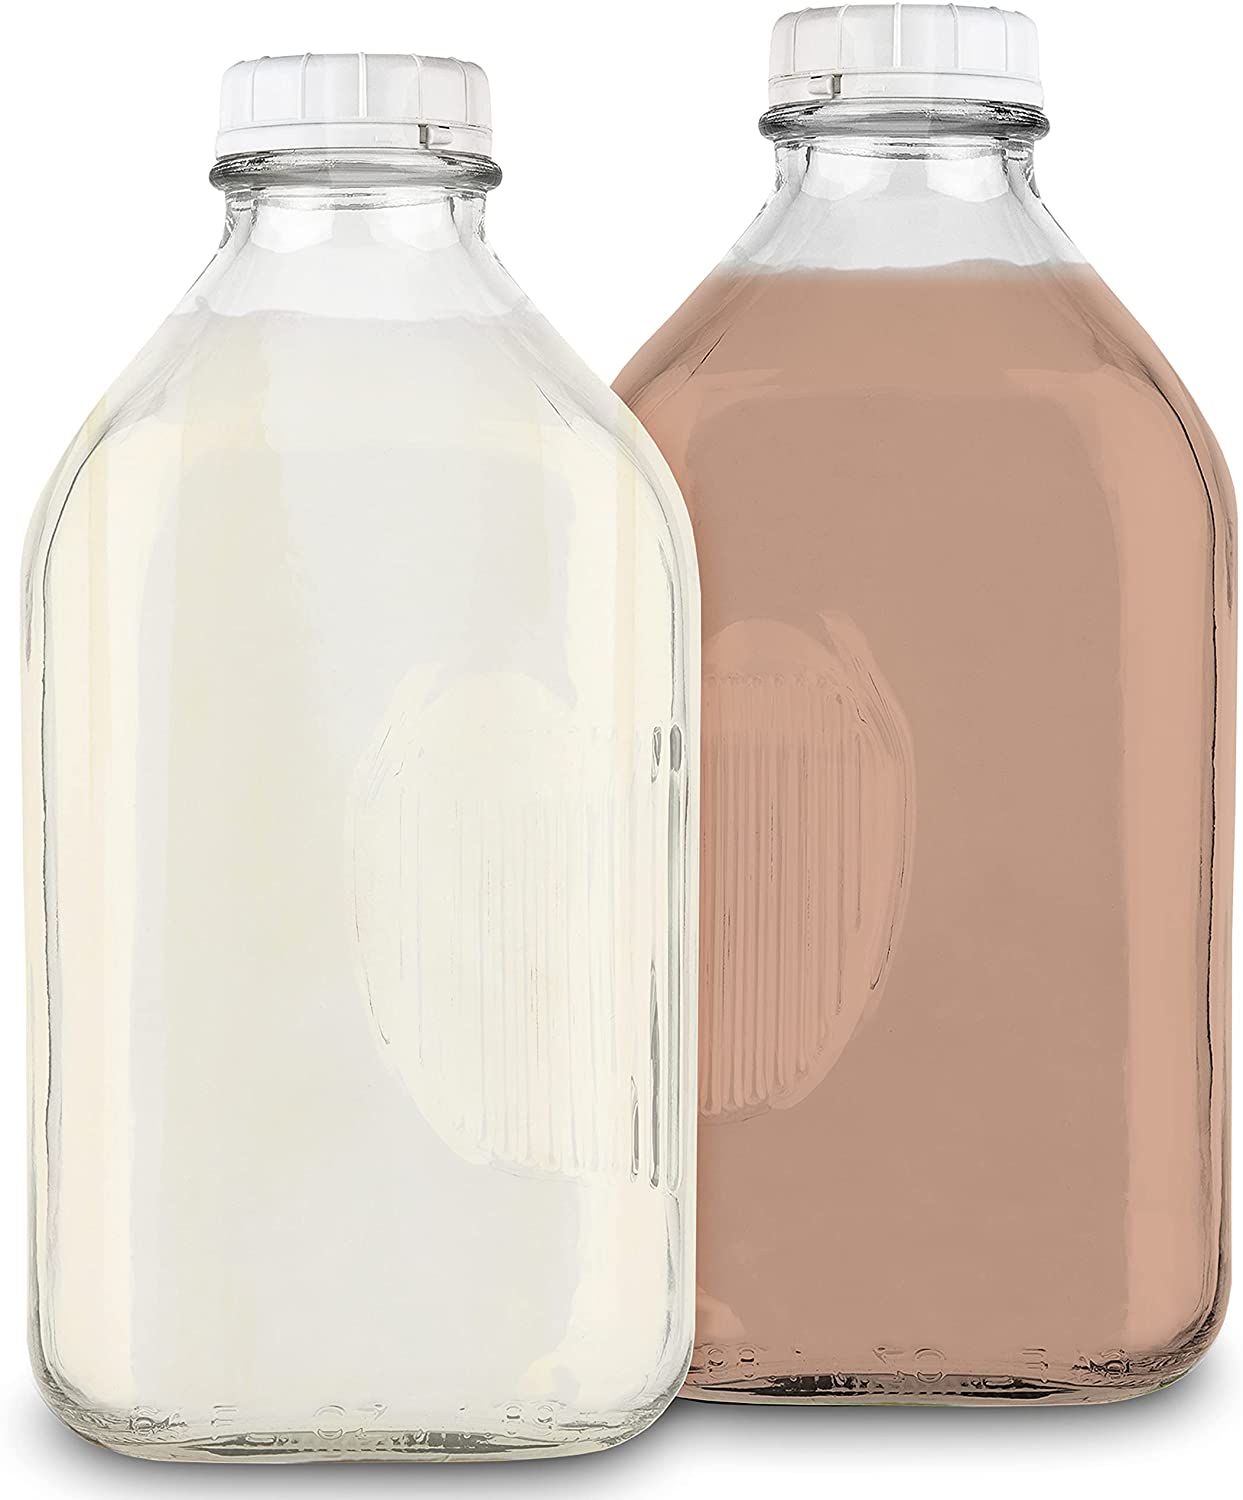  6 Pcs 16oz Glass Milk Bottles with Lids Small Milk